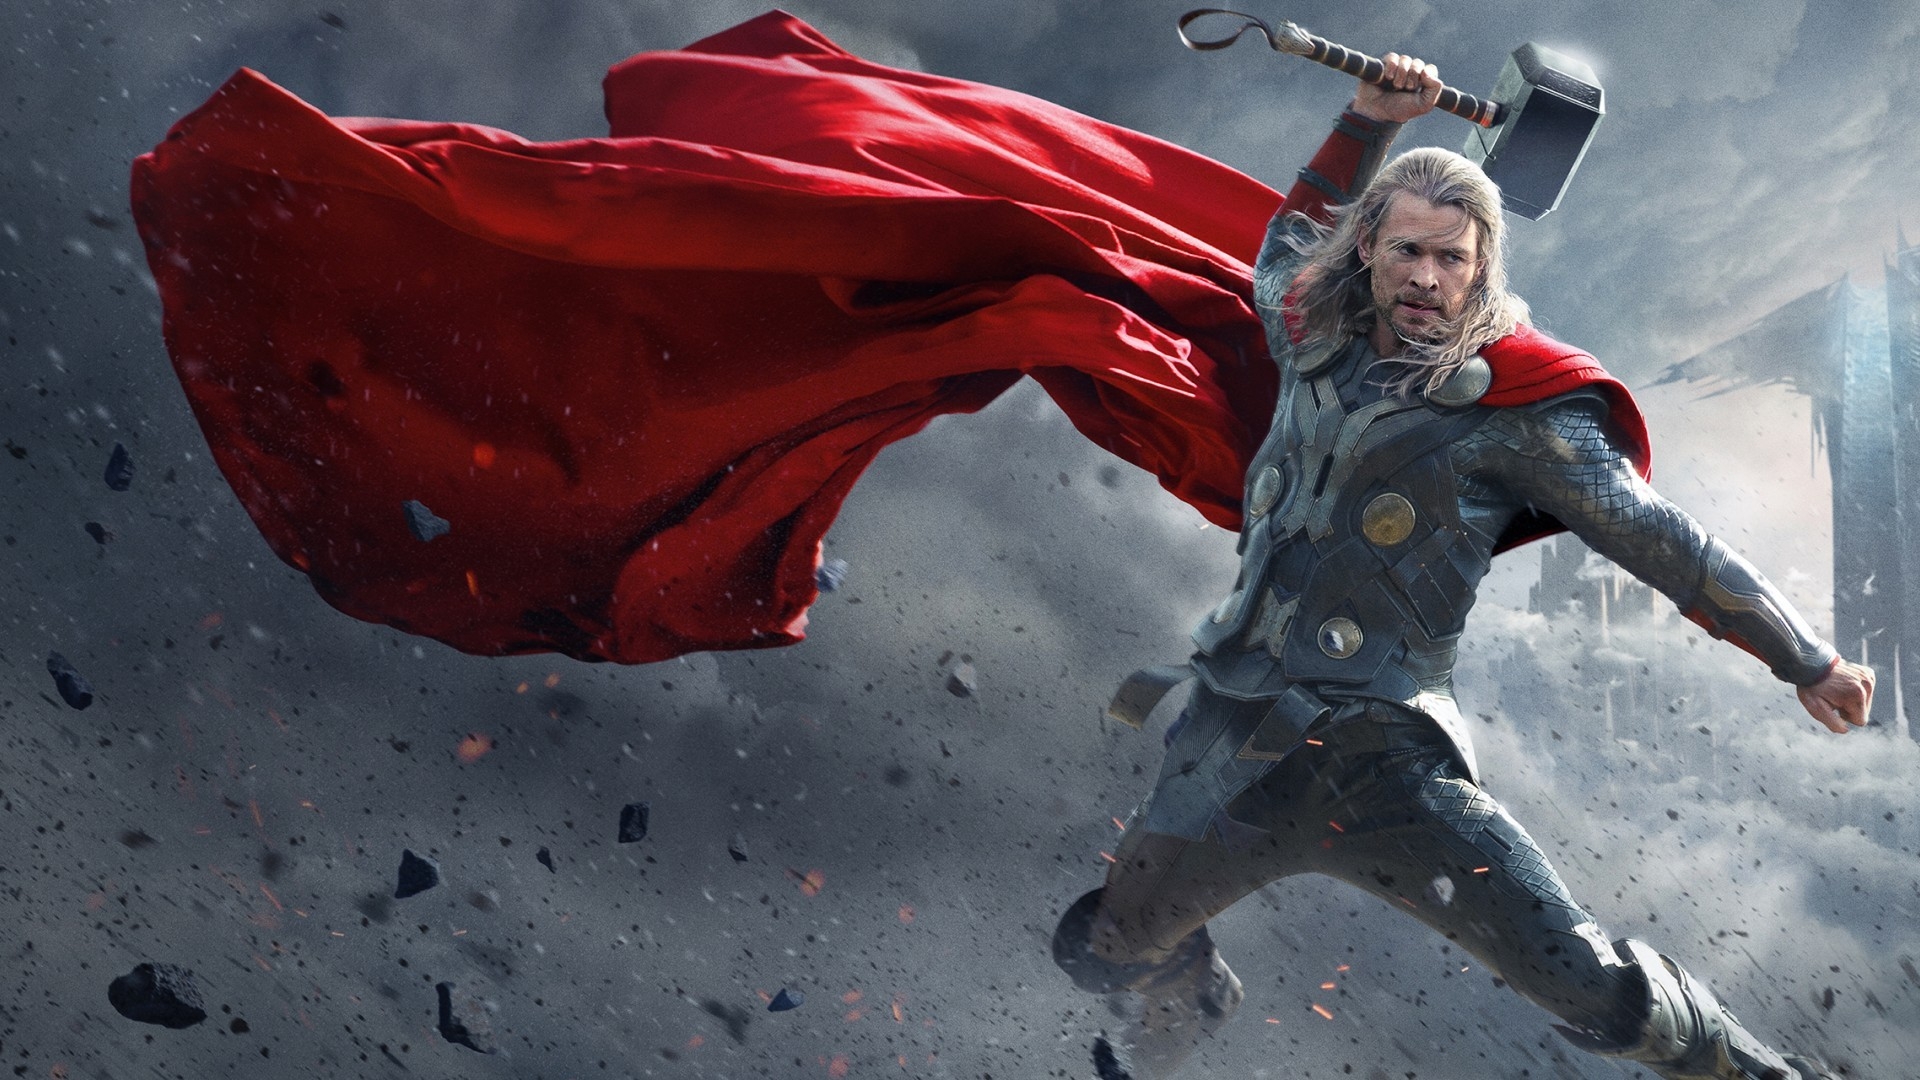 2013 Thor The Dark World Poster for 1920 x 1080 HDTV 1080p resolution